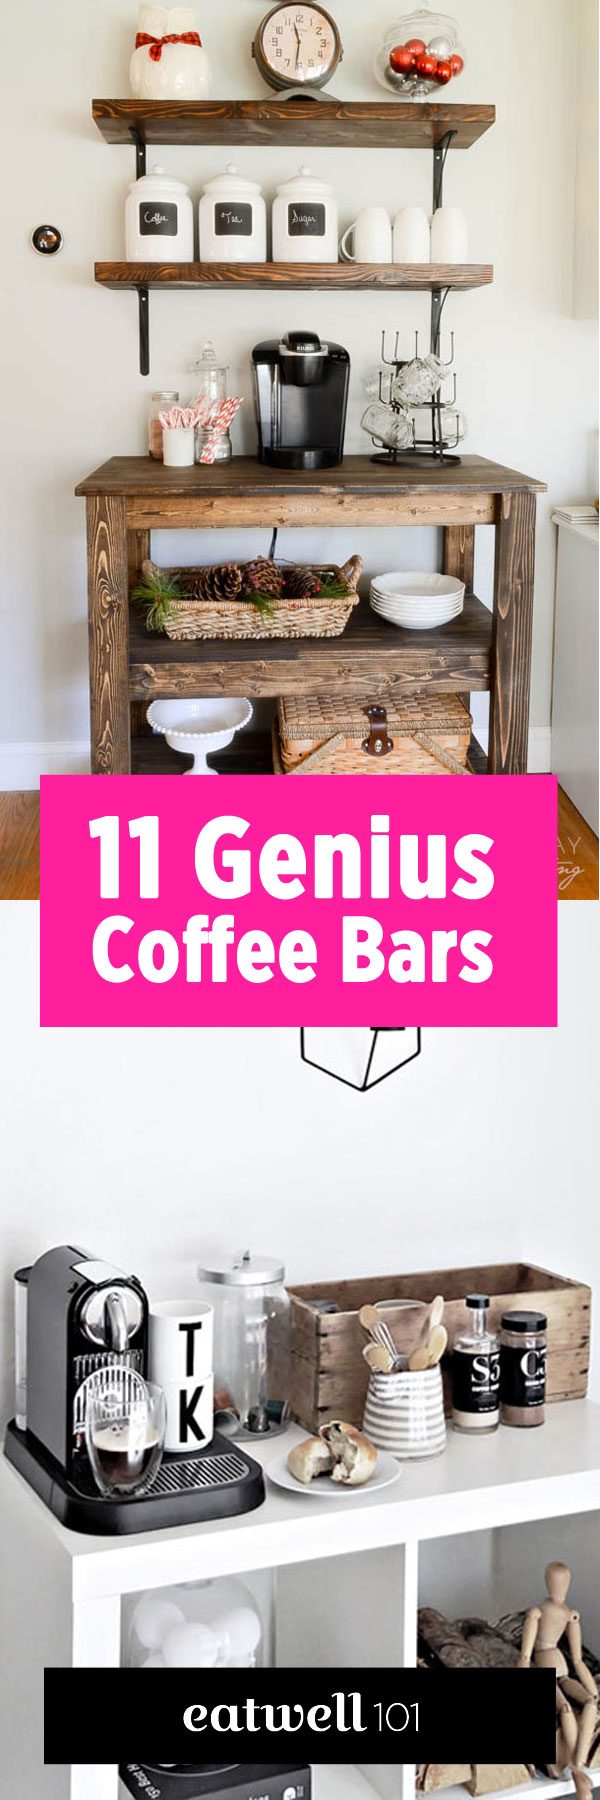 11 Genius Ways to Design a Home Coffee Bar